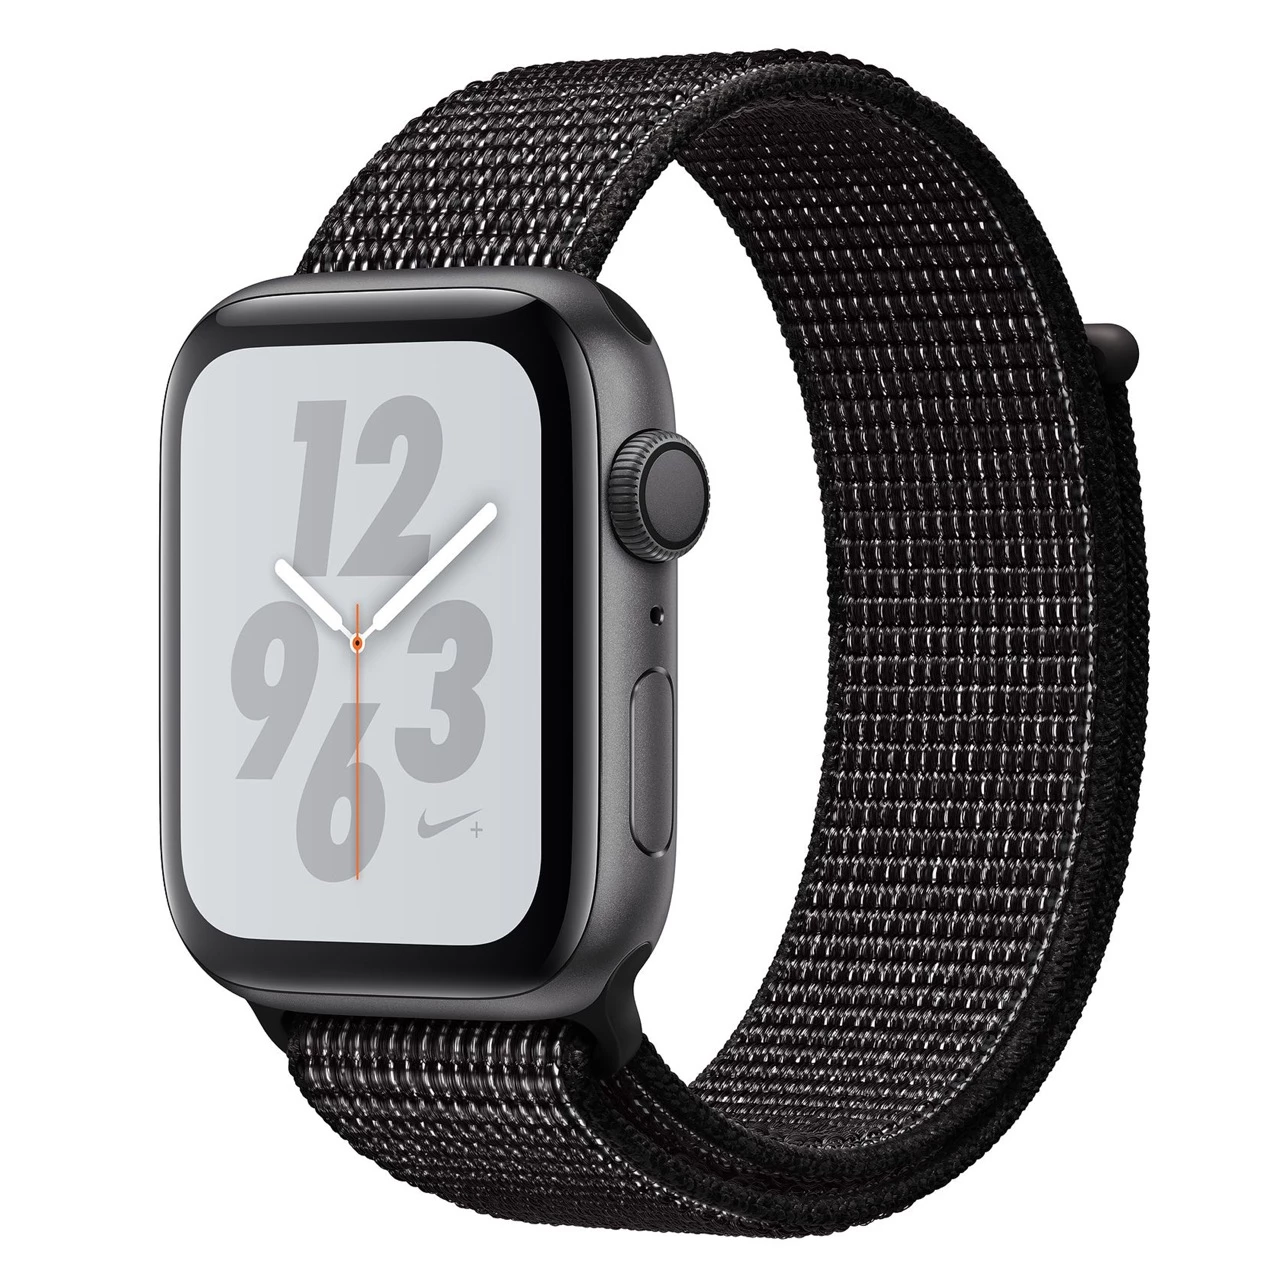 Apple Watch Series 4 Nike + (GPS) 44mm Space Gray Aluminium Case with Black Nike Sport Loop (MU7J2)